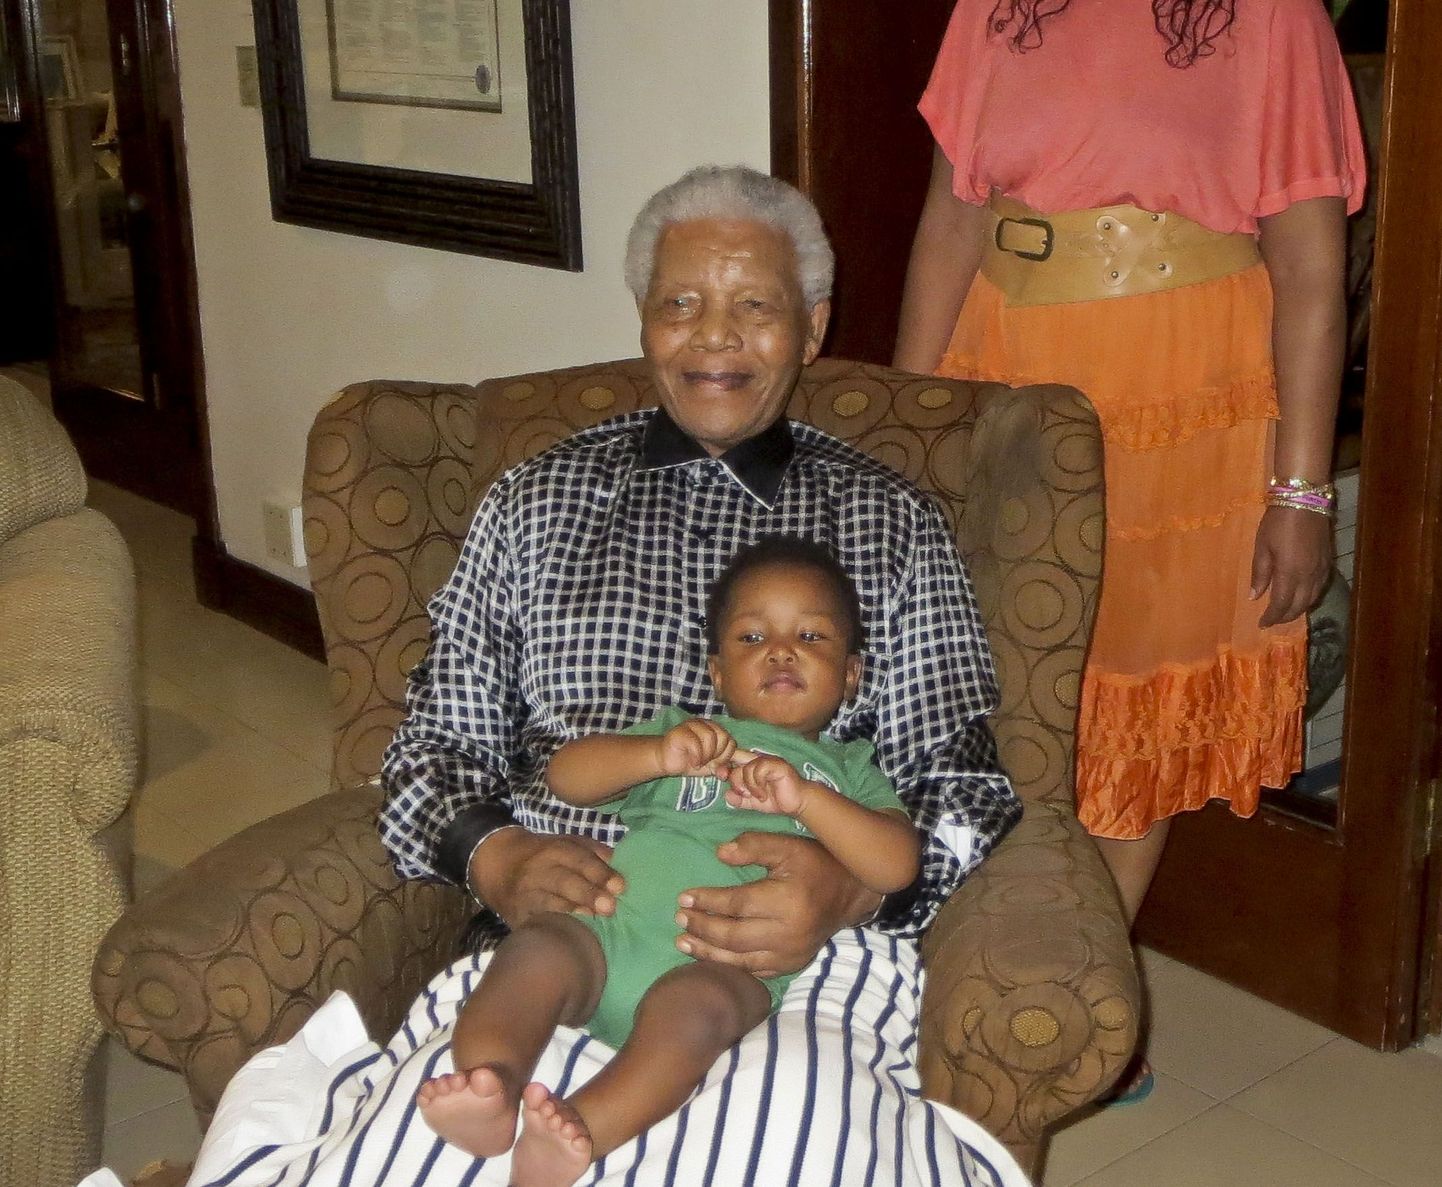 Nelson Mandela veebruari alguses koos oma lapselapselapse Zen Manawayga.